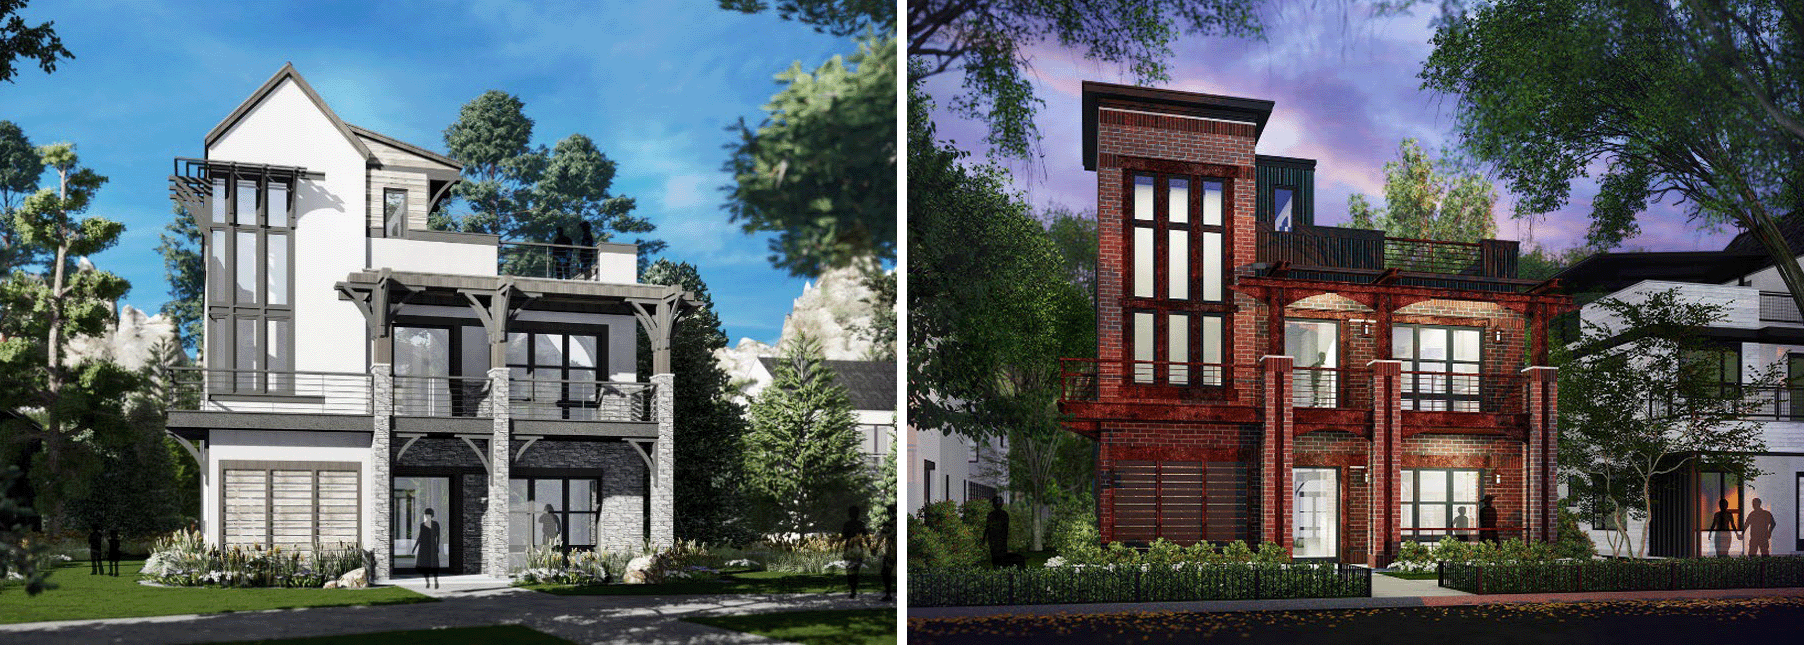 House facade alternatives: warehouse chic and rustic Scandinavian, BSB Design